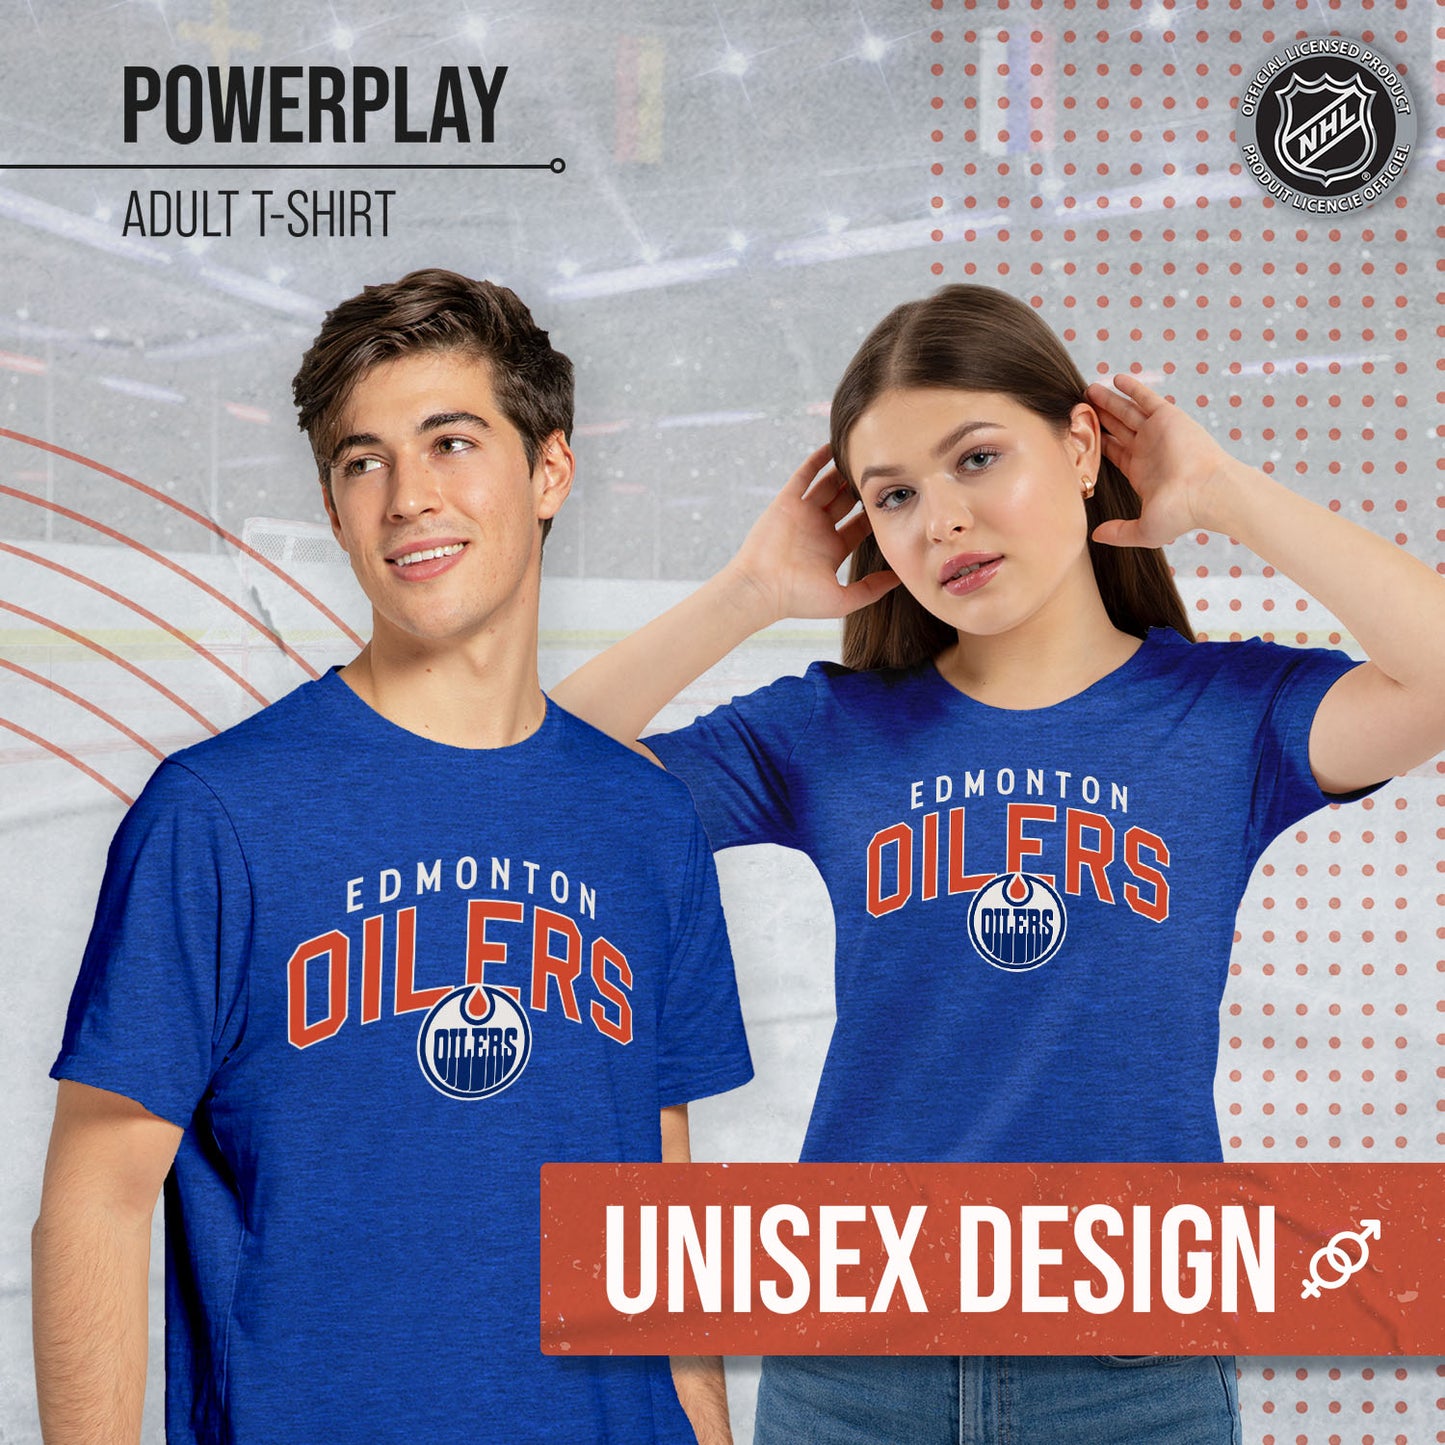 Edmonton Oilers NHL Adult Powerplay Heathered Unisex T-Shirt - Royal